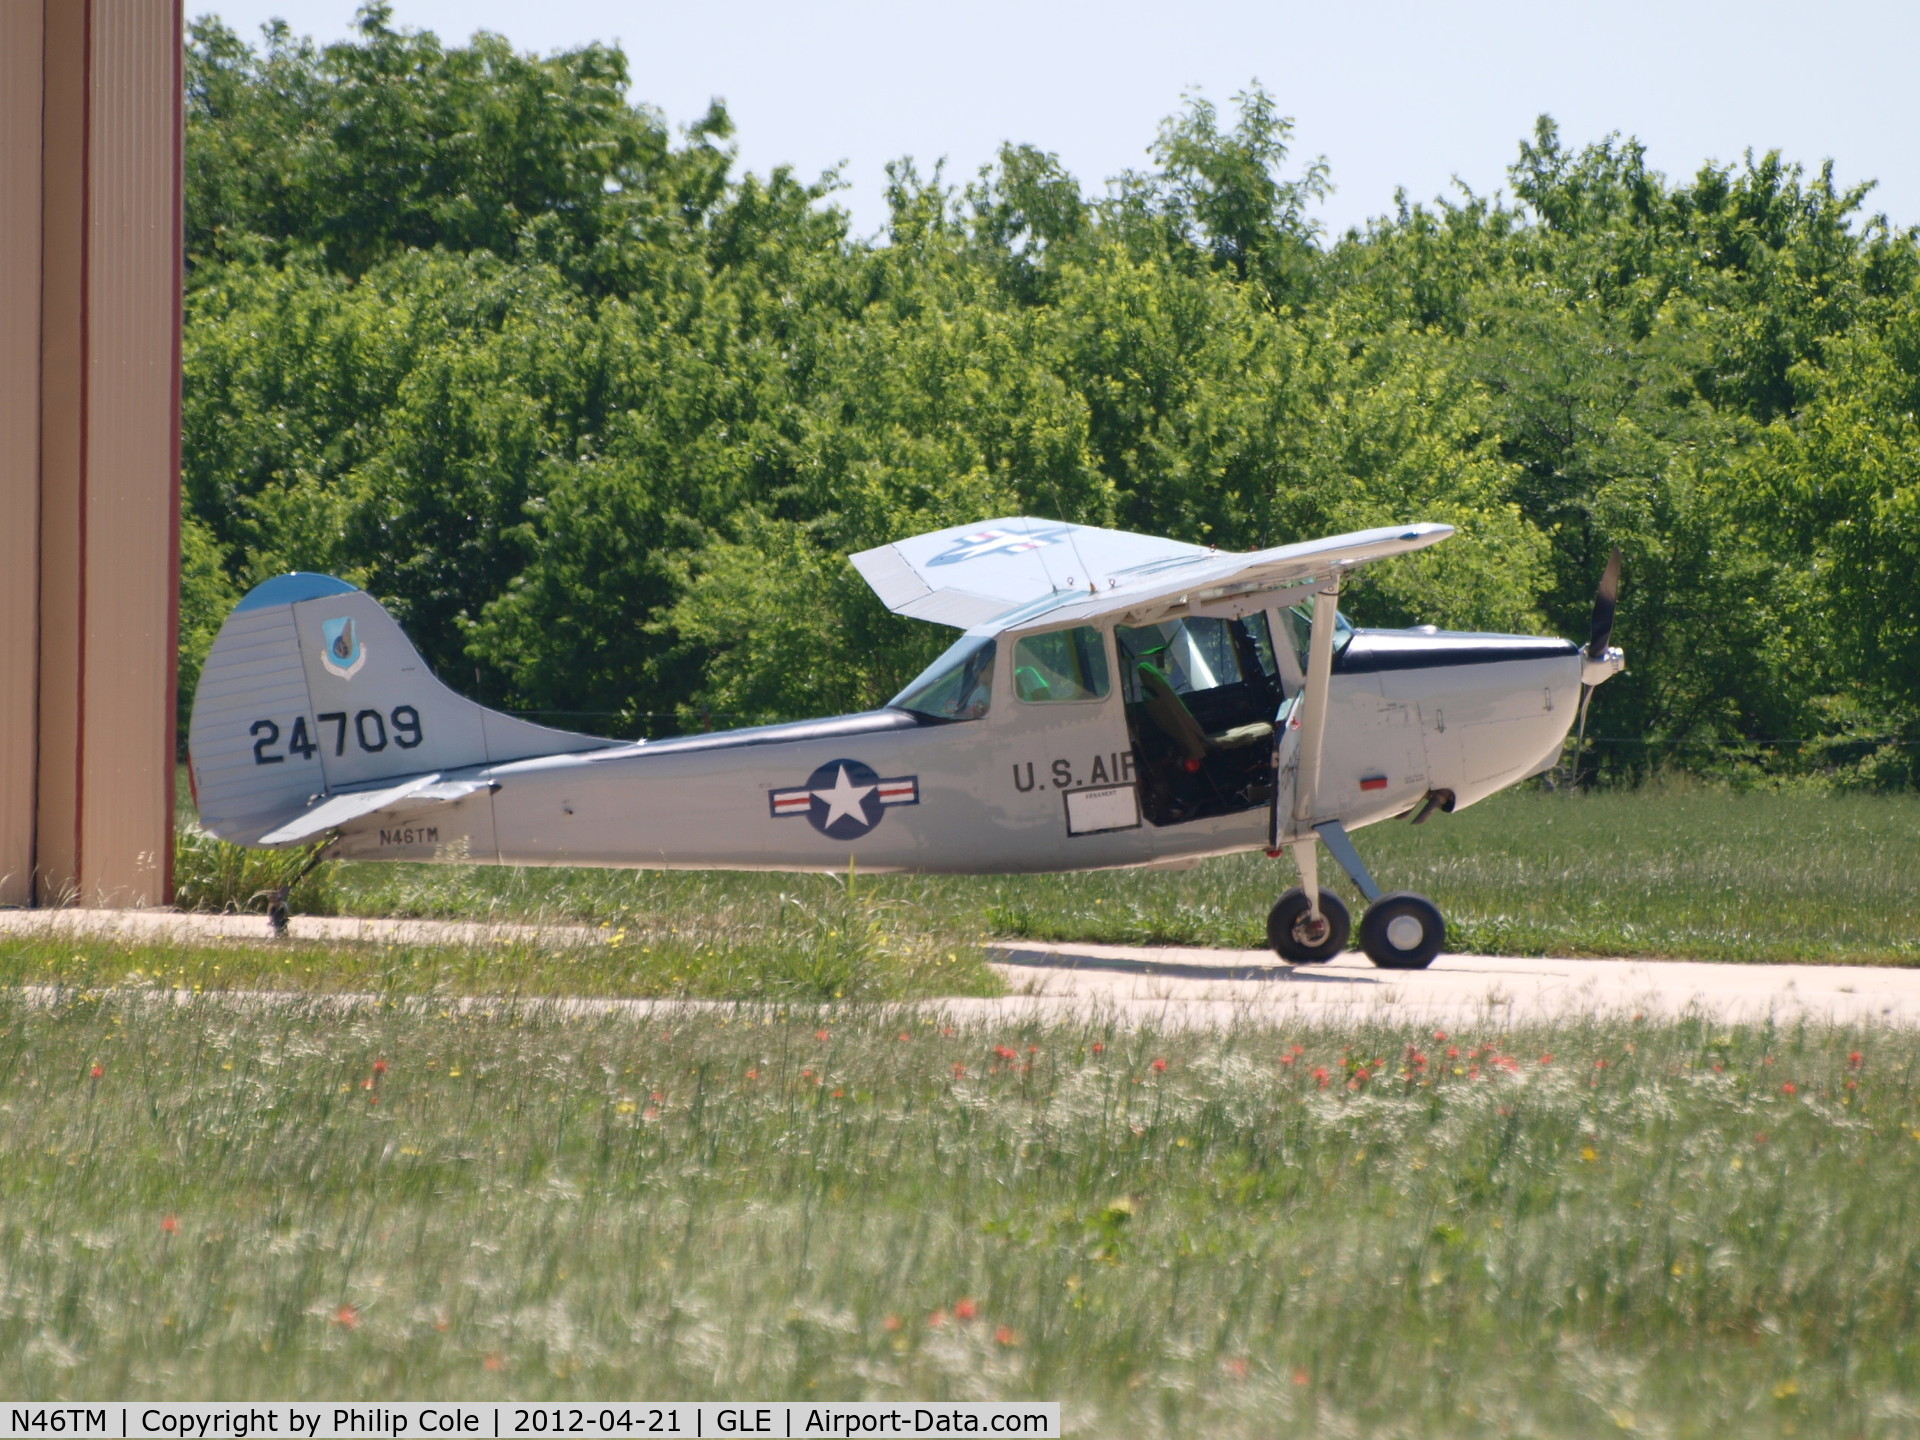 N46TM, Cessna 305C (0-1E) C/N 24709, Visitor